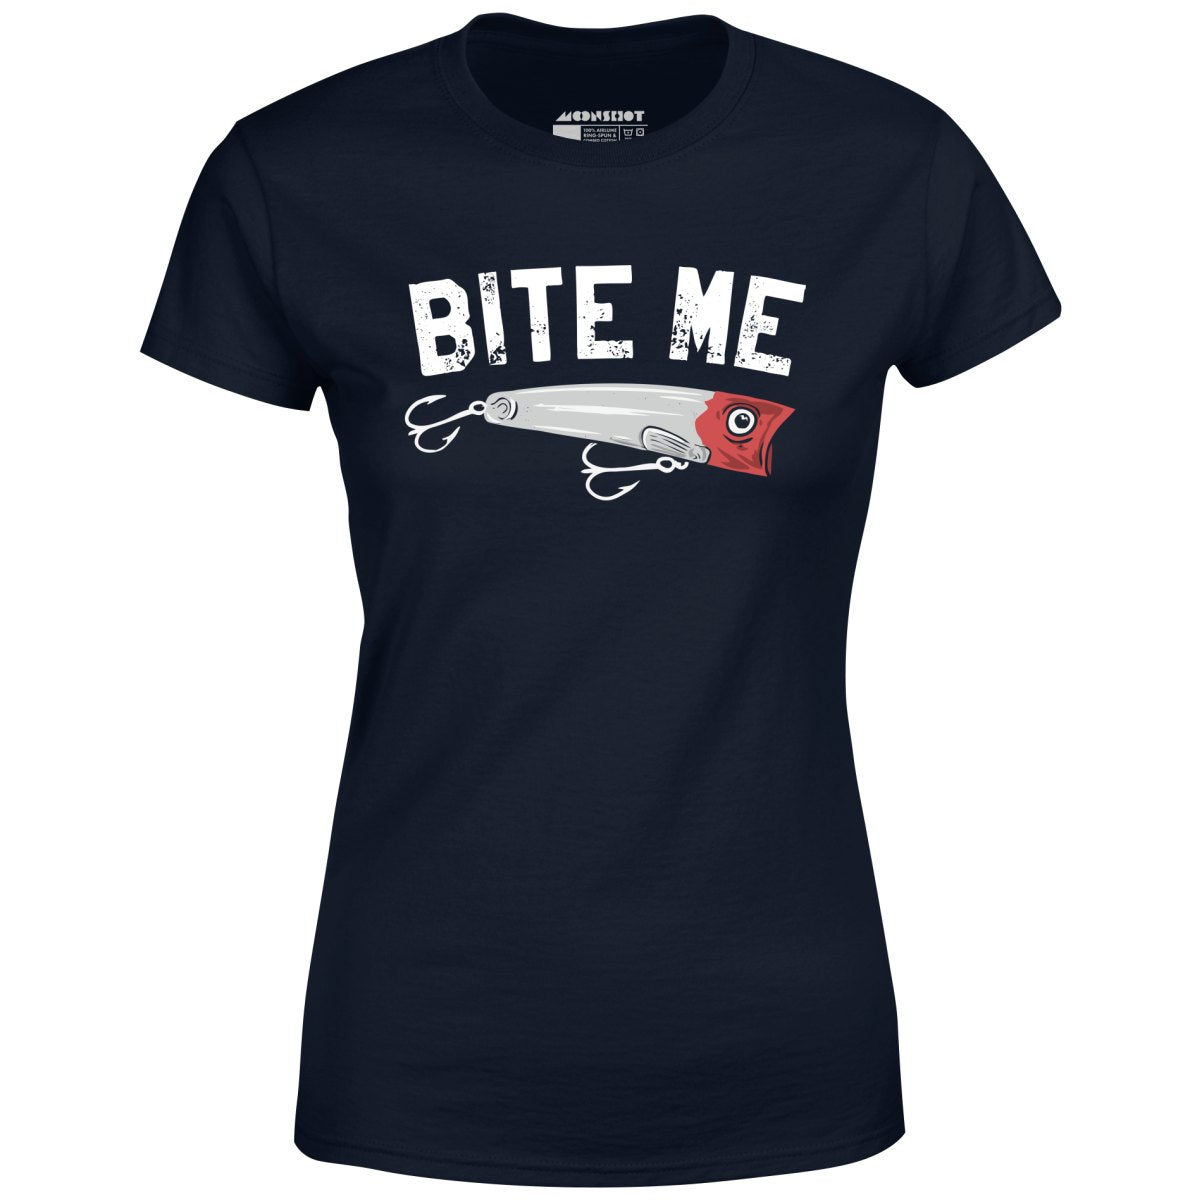 Bite Me - Women's T-Shirt